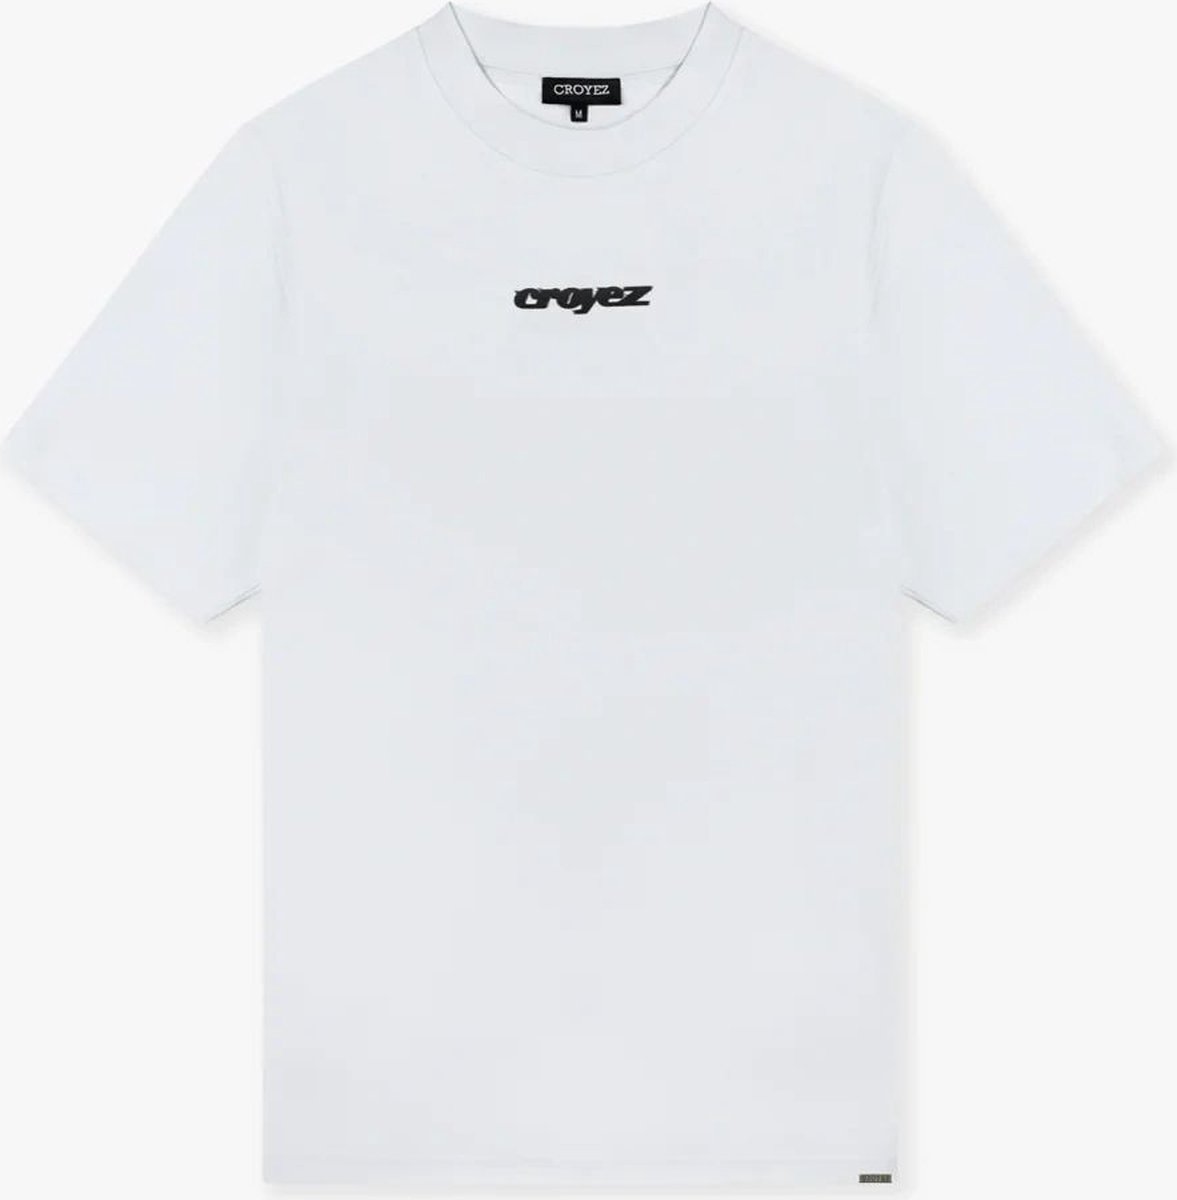 Croyez Track T-Shirt White Maat L